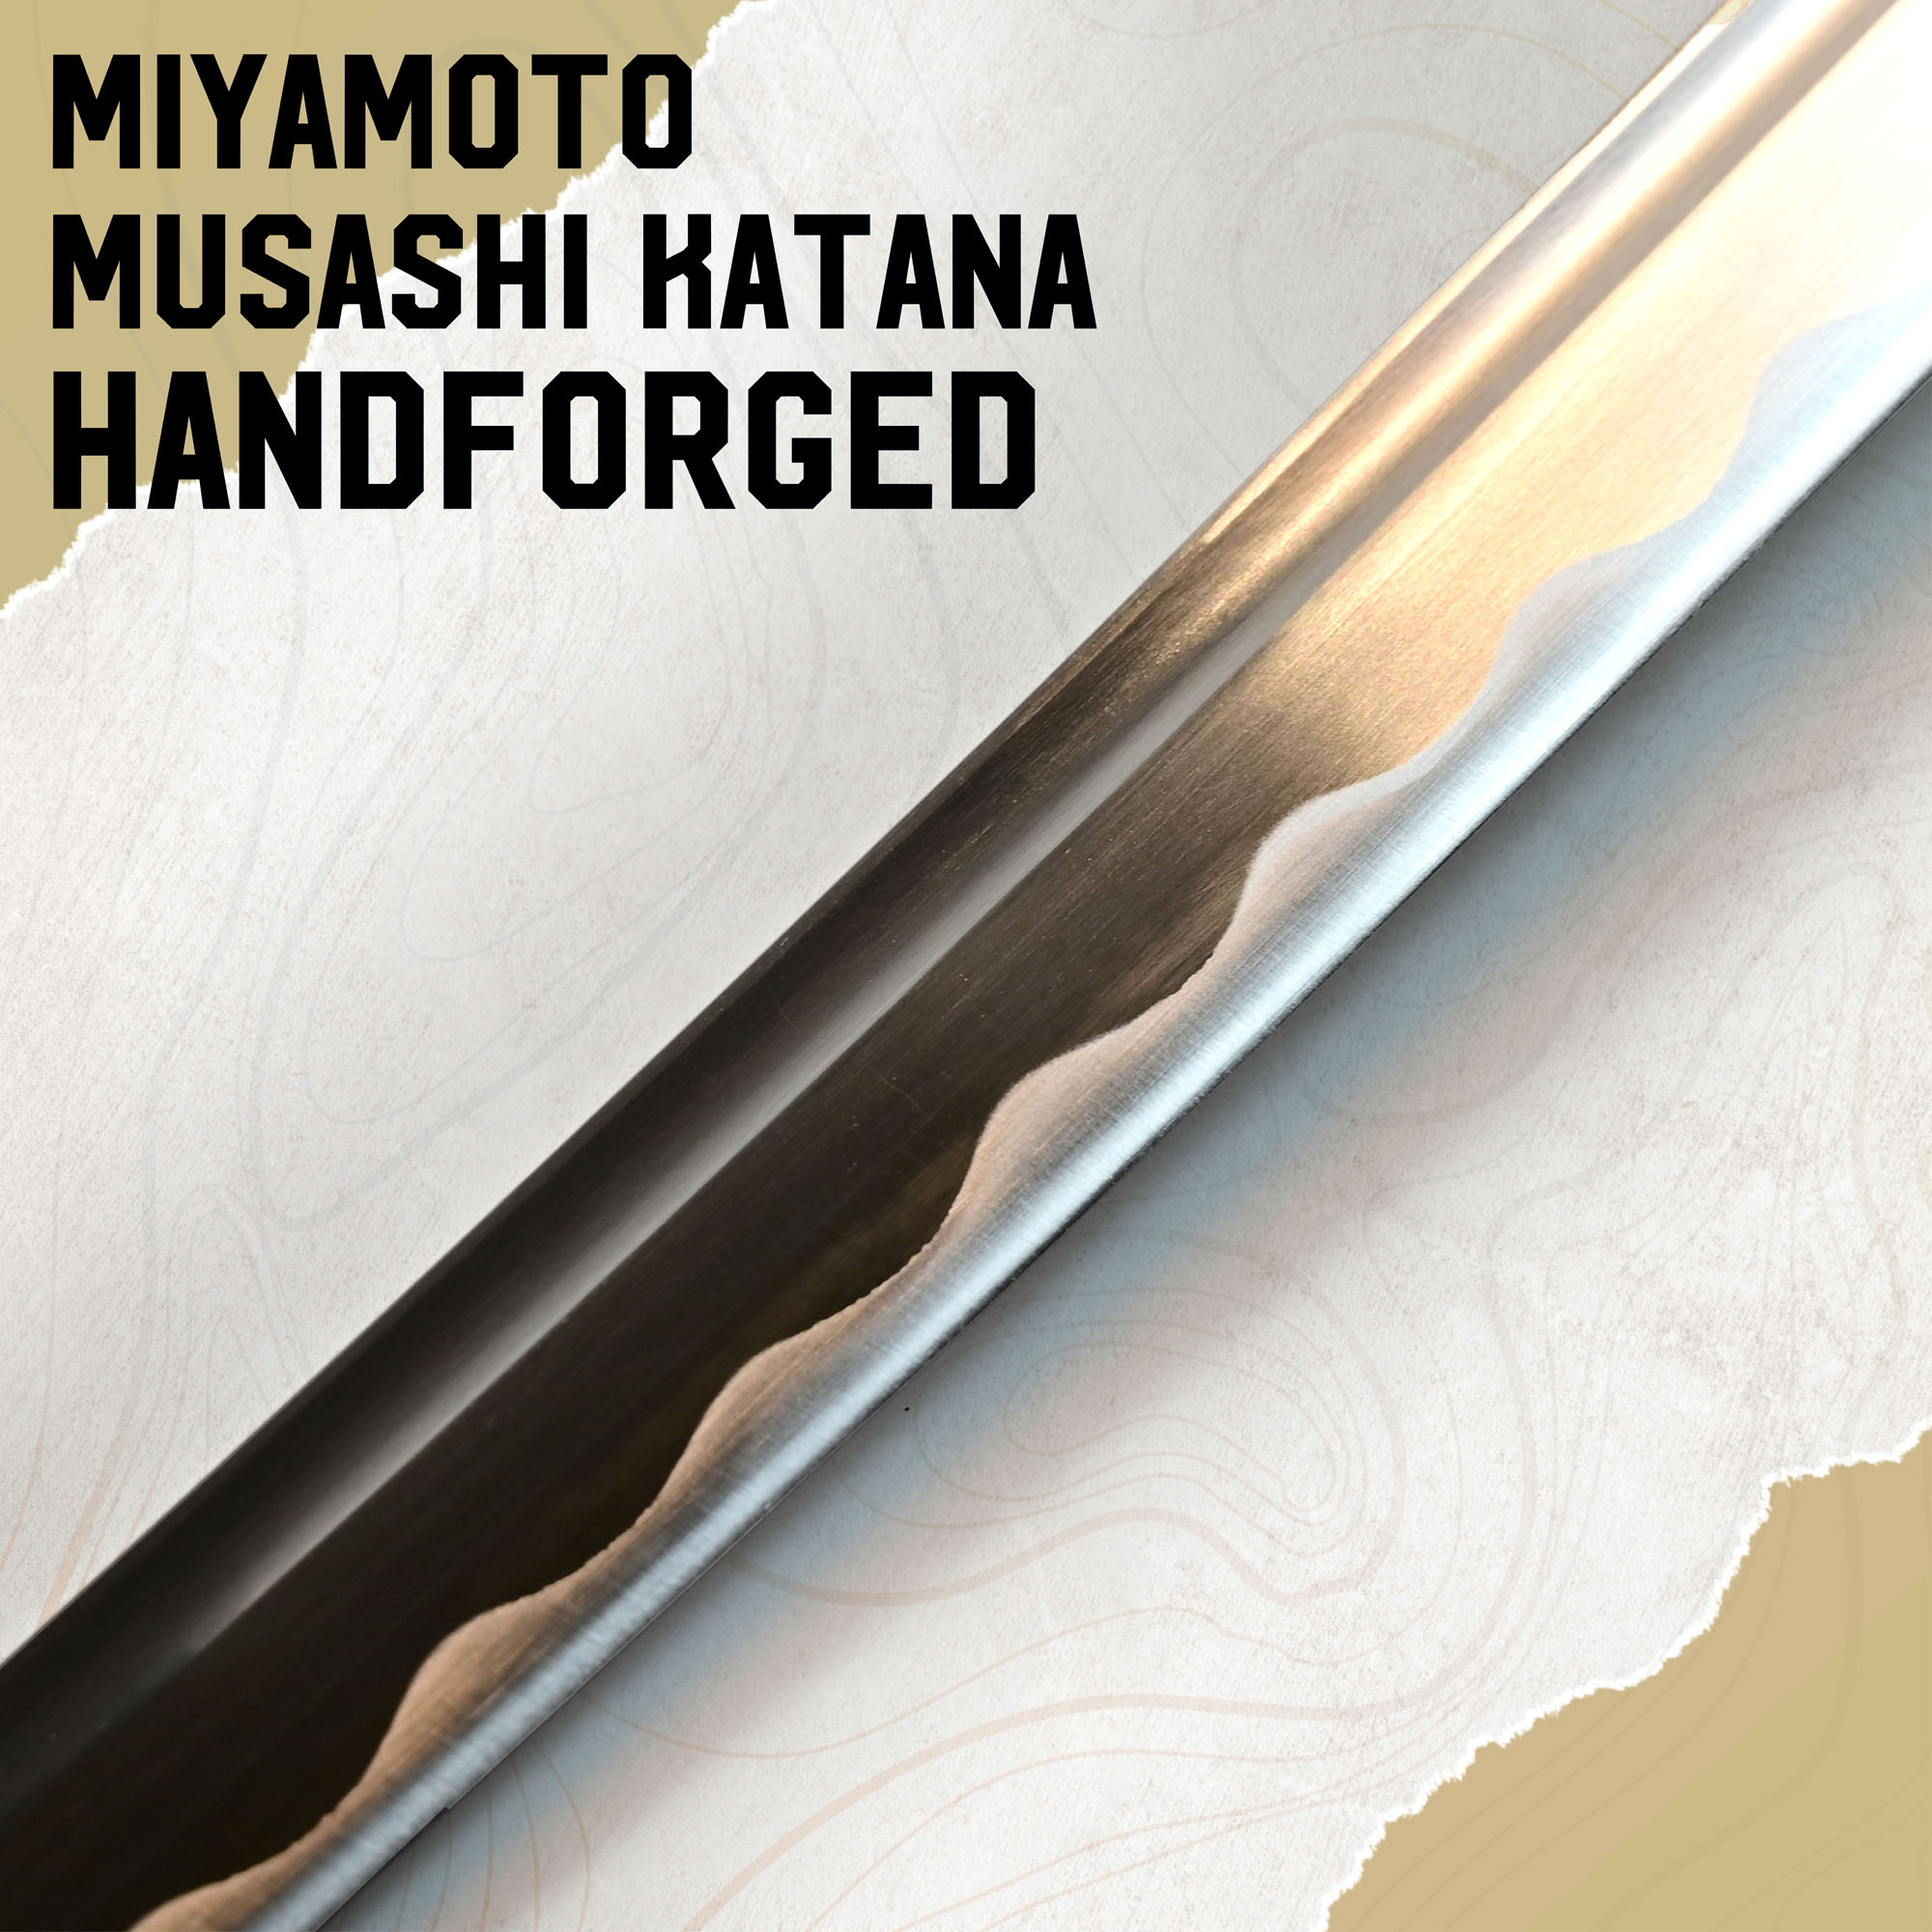 Miyamoto Musashi Katana, handforged